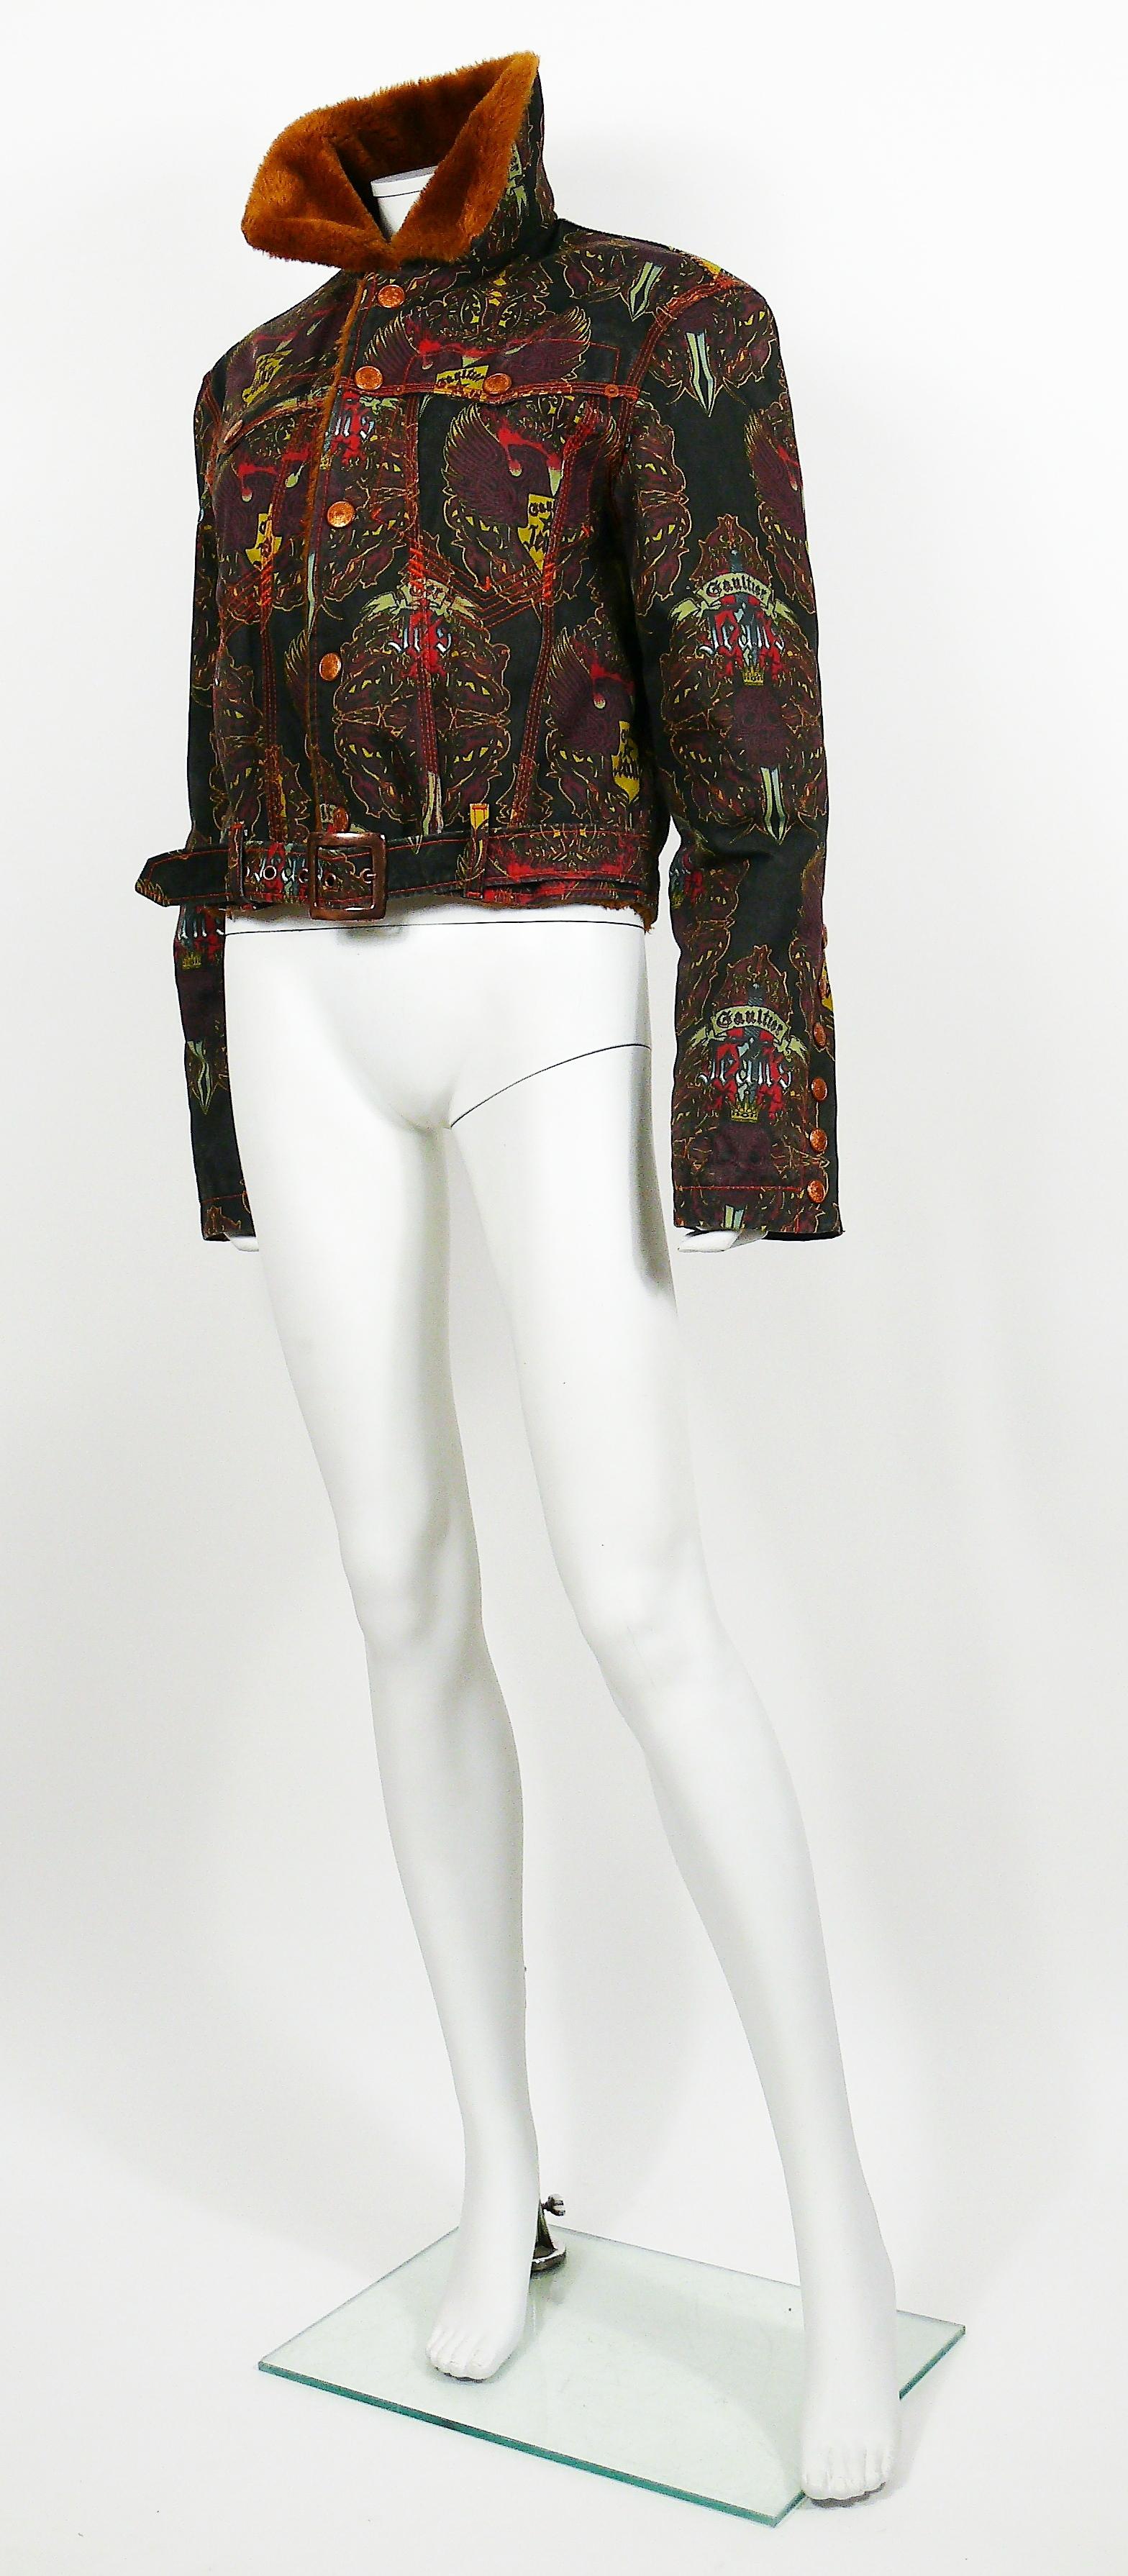 jean paul gaultier vintage jacket